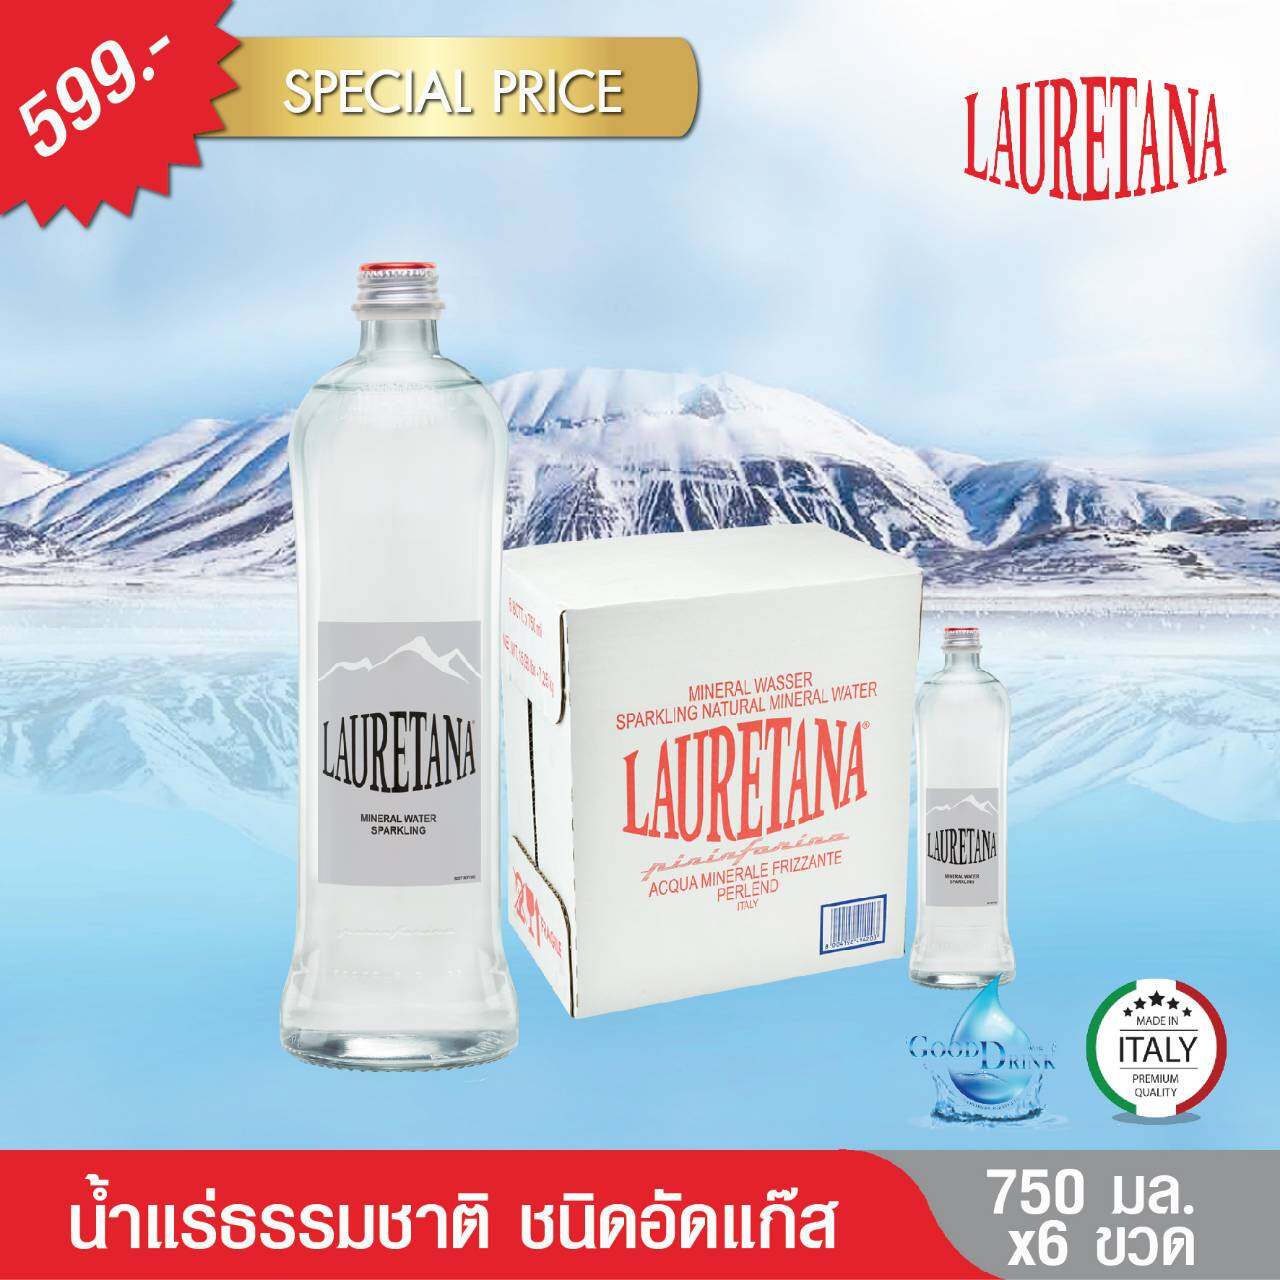 Lauretana Natural Sparkling Mineral Water PININFARINA 750 ML. Pack 6 bottles , เลาว์เรตาน่า น้ำแร่ธรรมชาติชนิดอัดแก๊ส ขวดดีไซน์พิเศษ PININFARINA 750 มล. แพค 6 ขวด